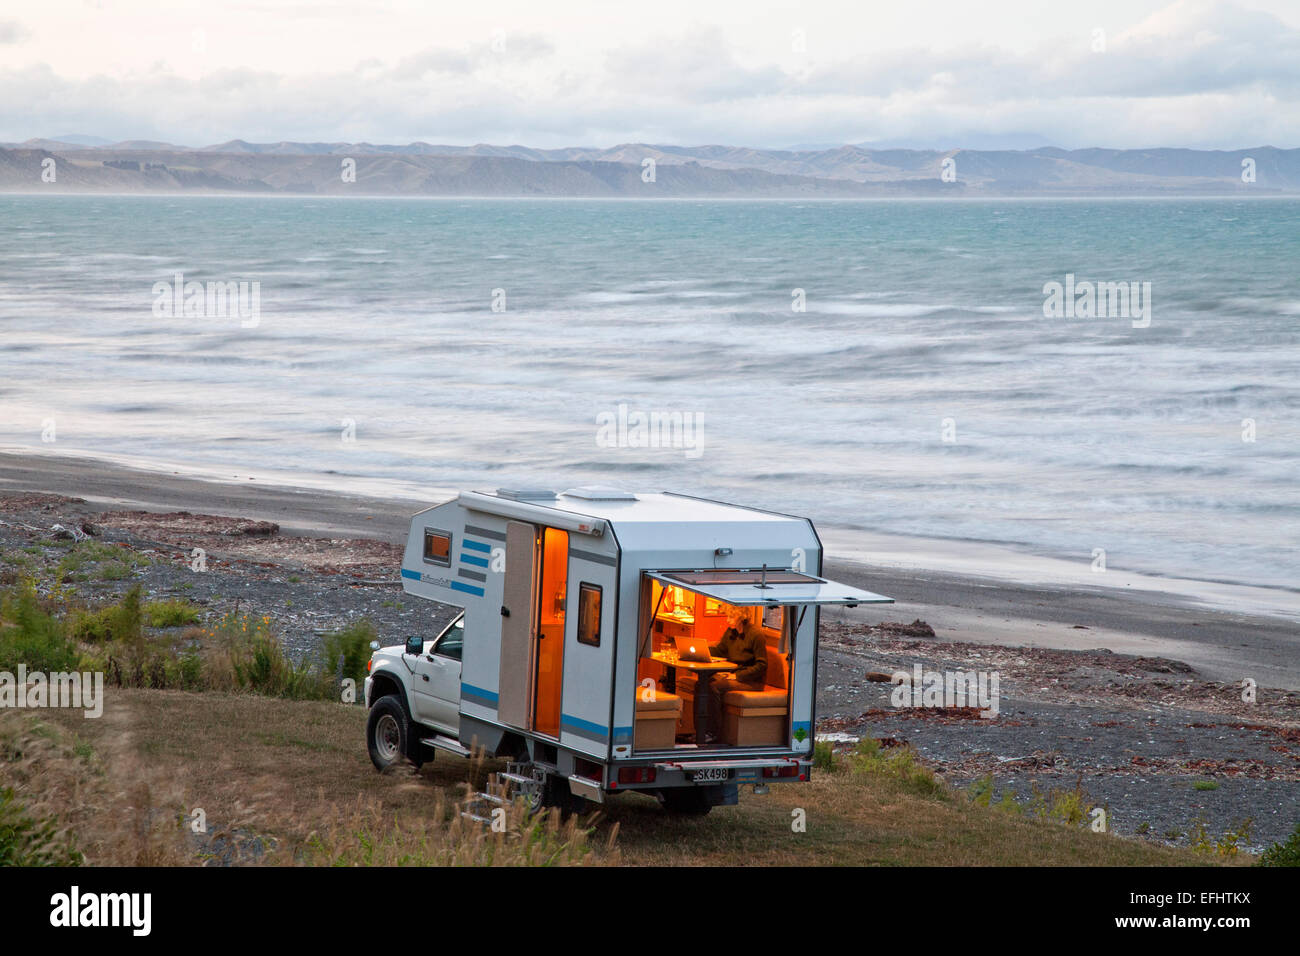 4WD Wohnmobil an der Küste, Camping am Meer, Südinsel, Neuseeland Stockfoto